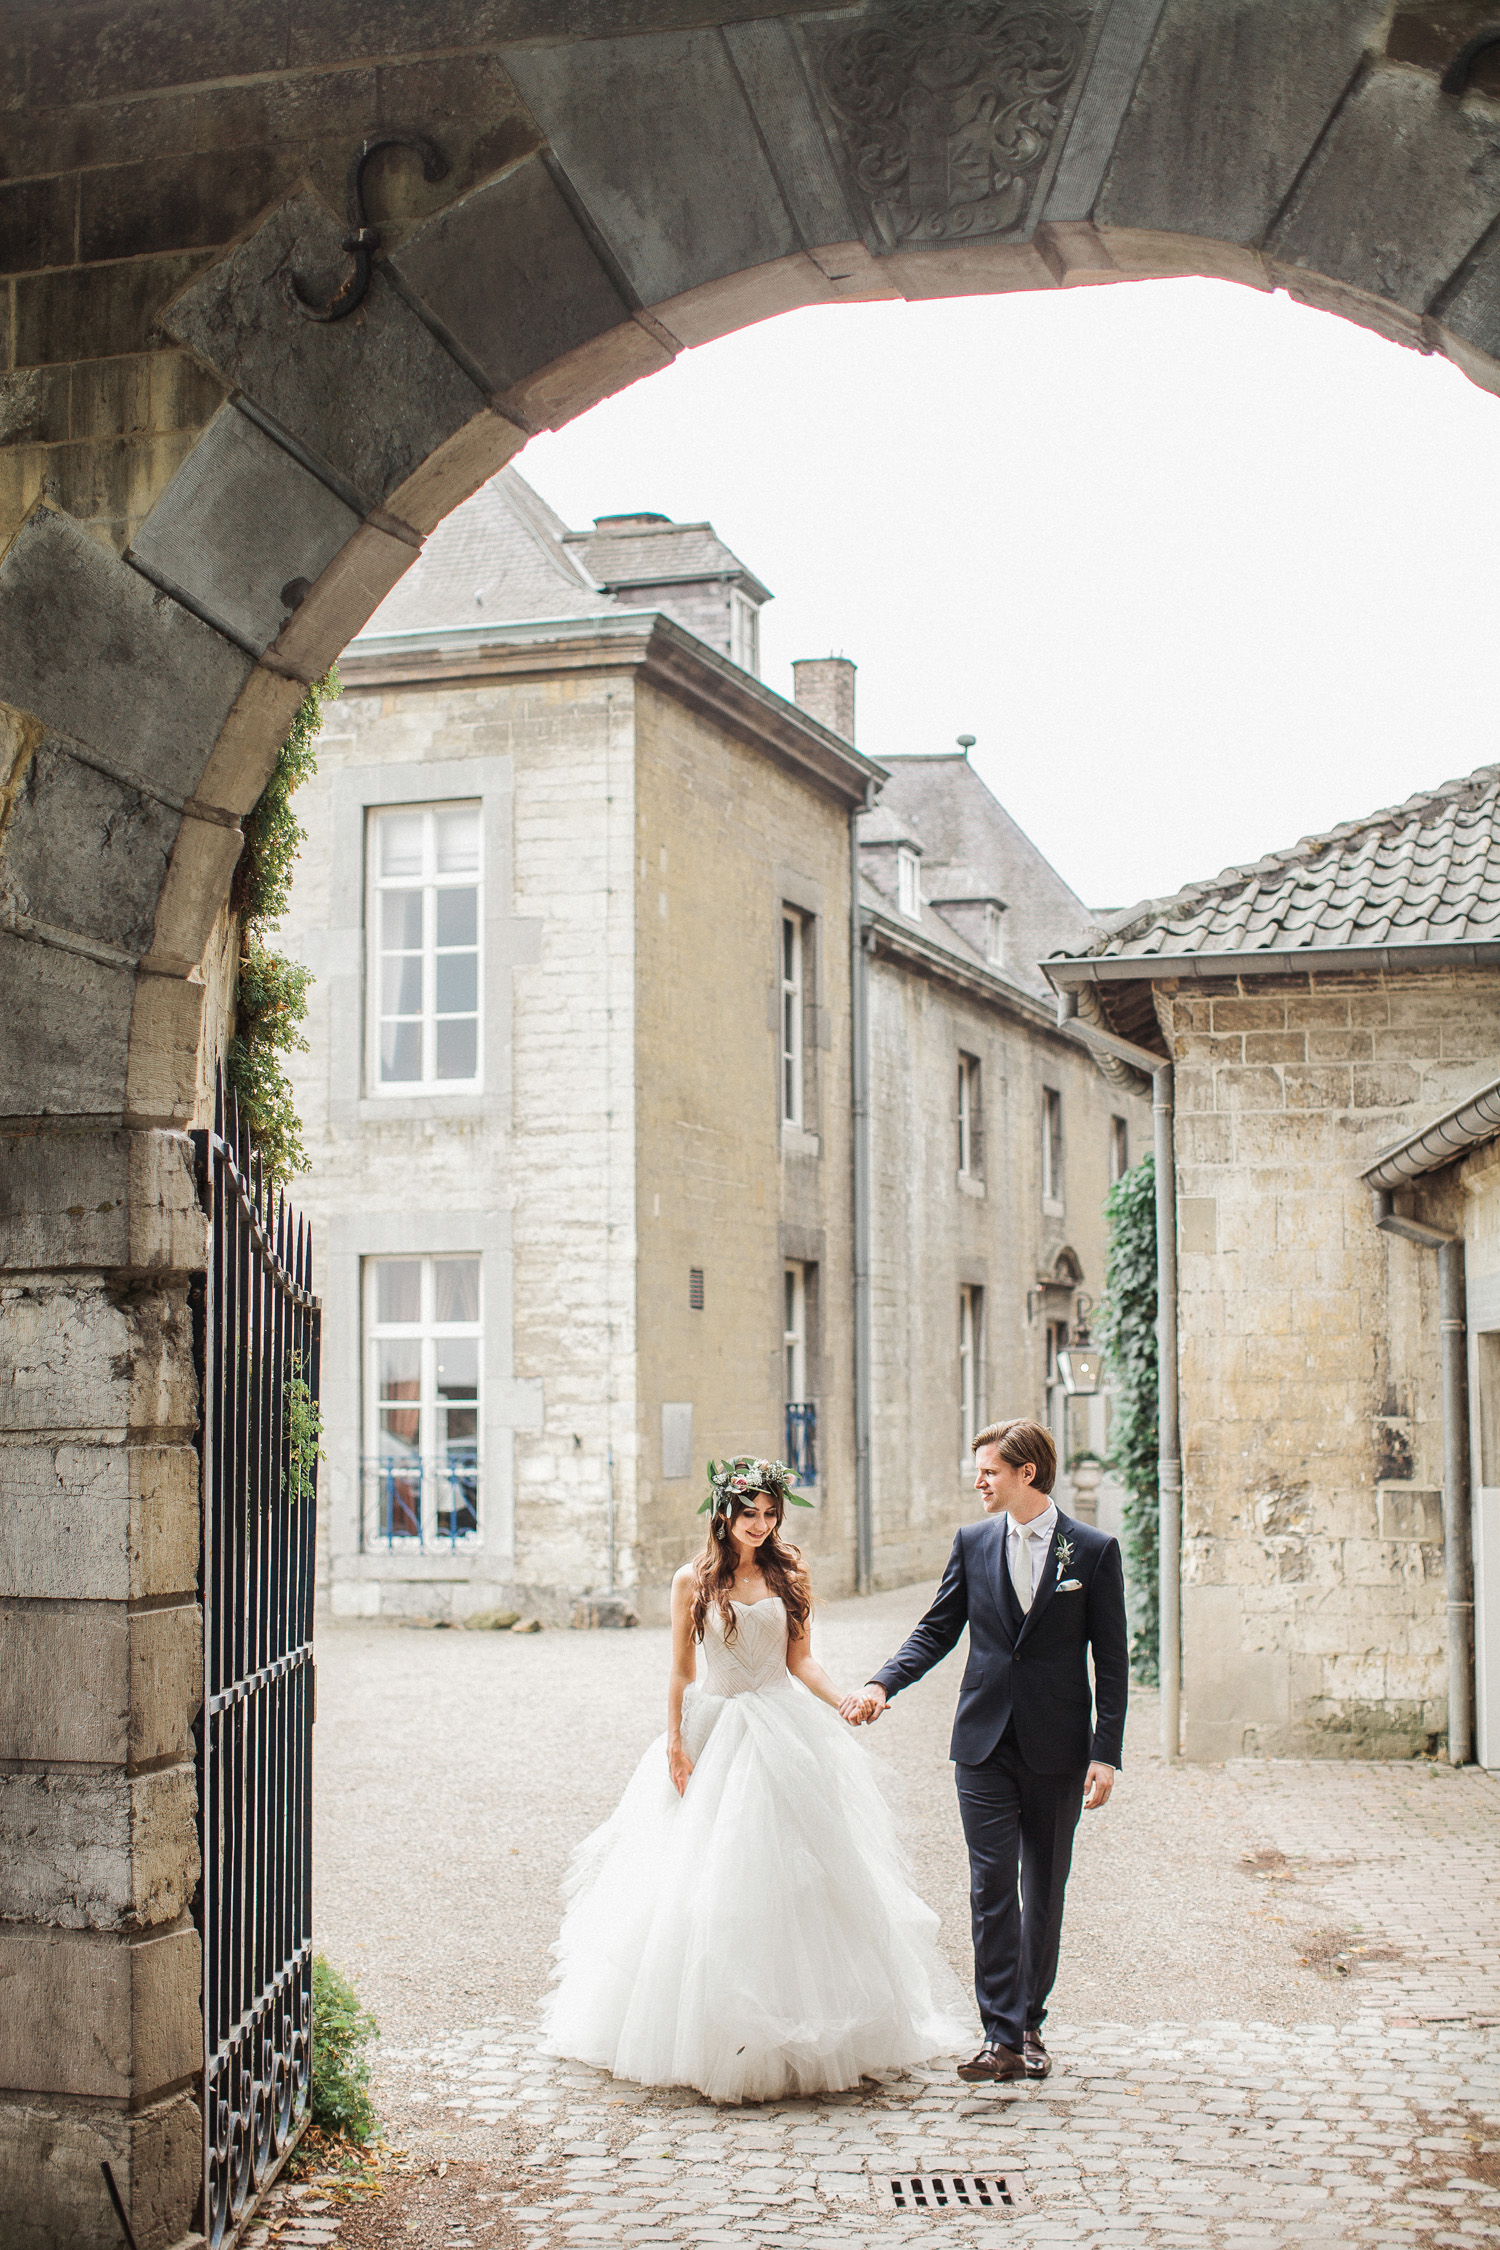 Weddings at Château Neercanne